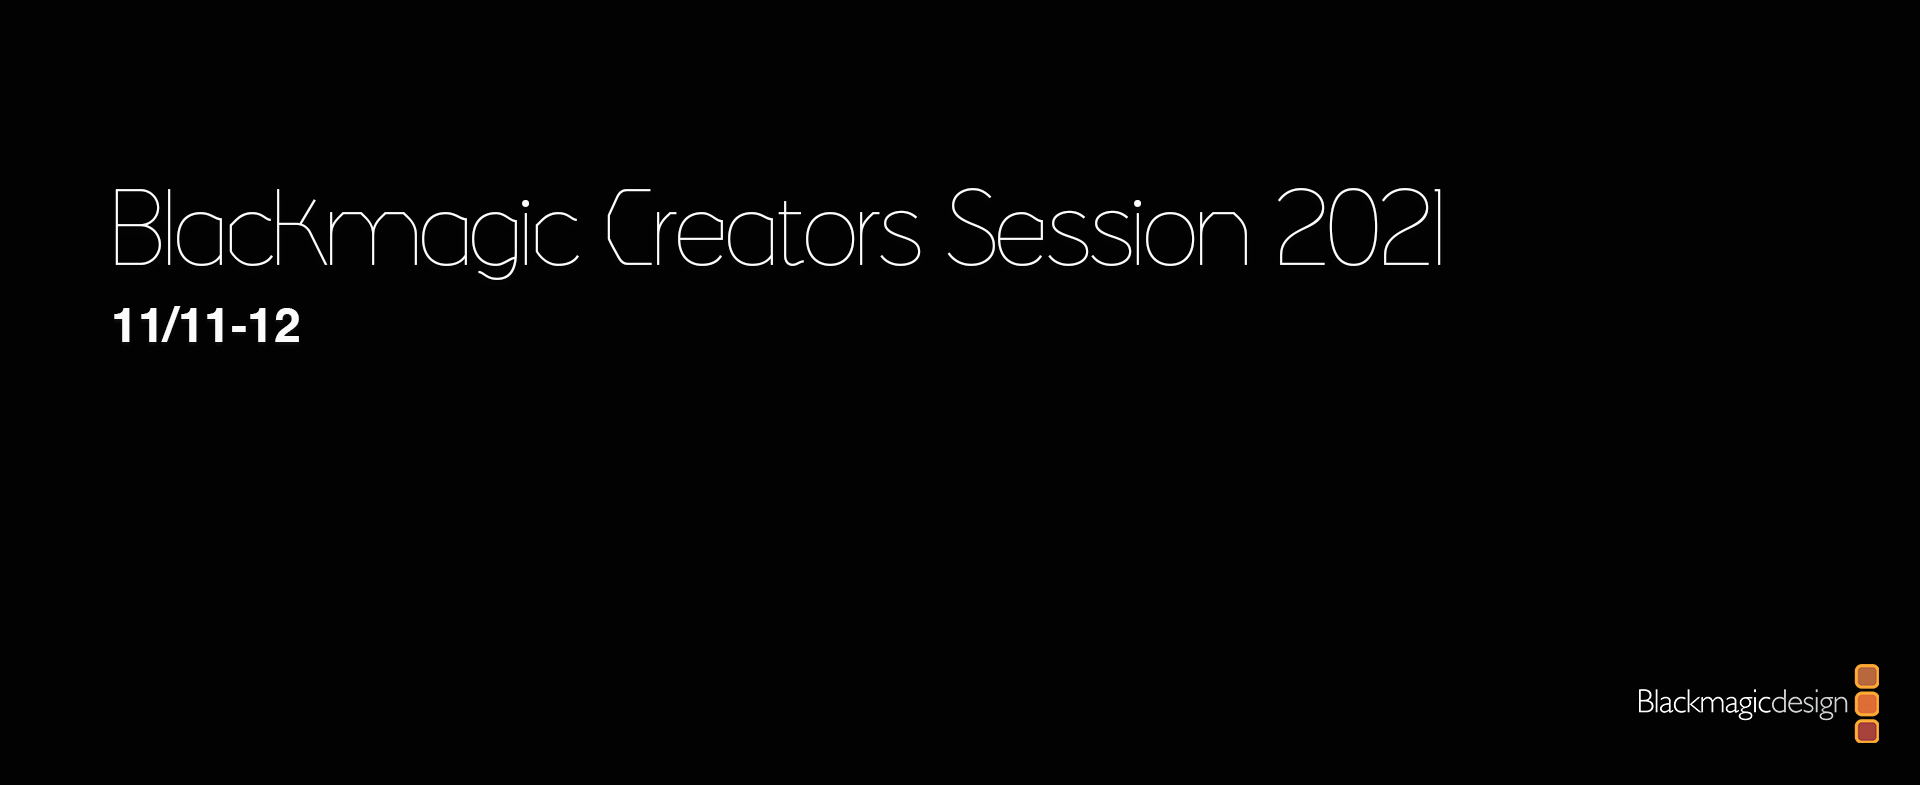 Blackmagic Creators Session 2021